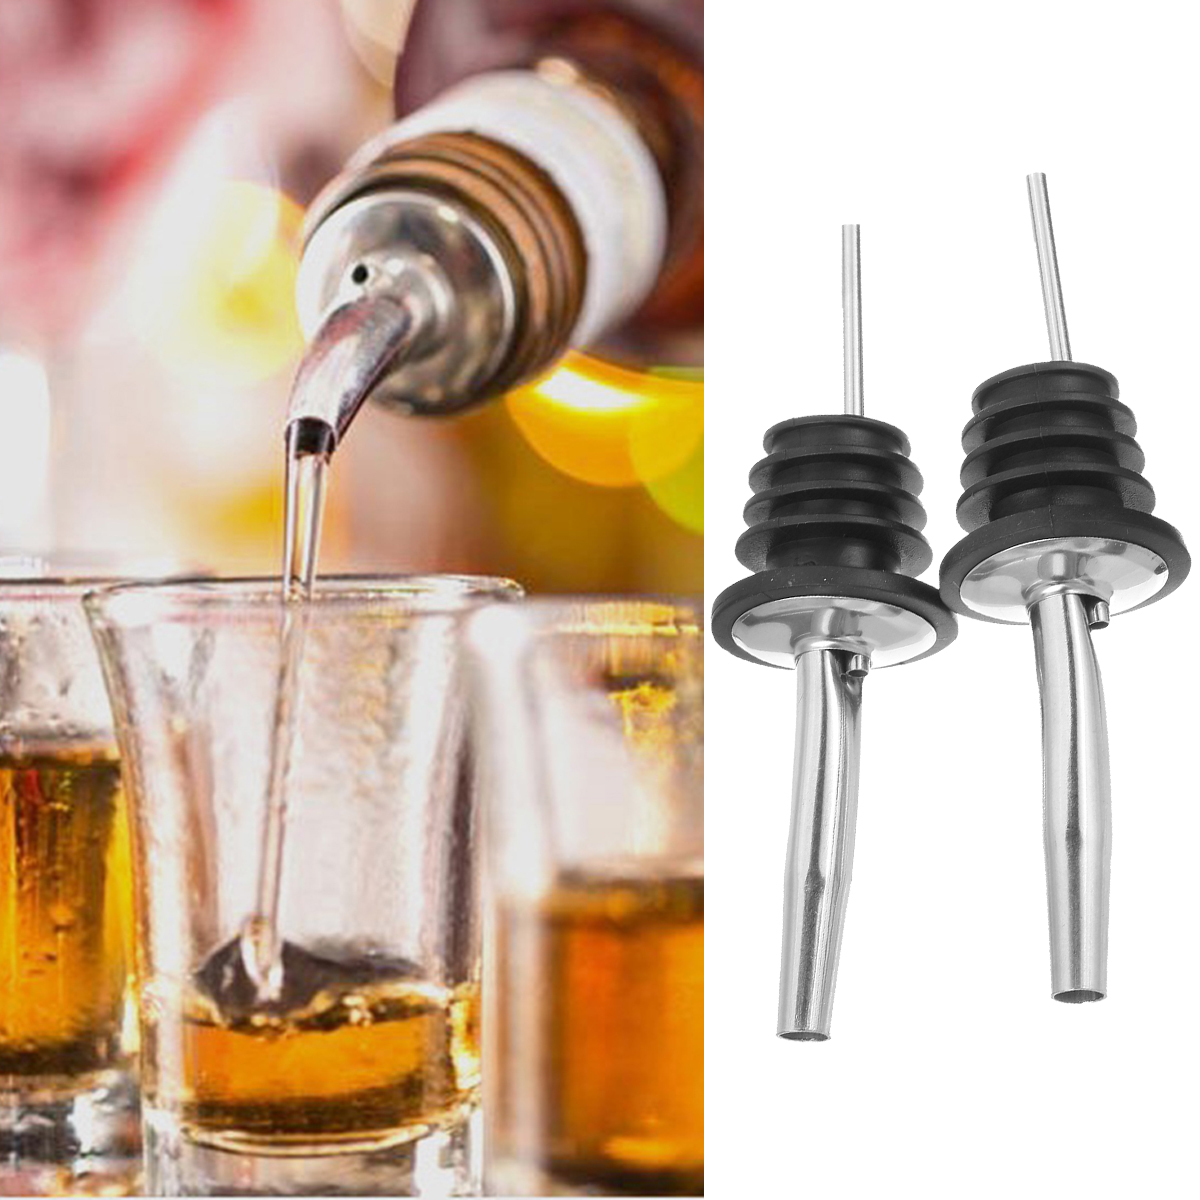 Cocktail-Maker-Set-Shaker-Mixer-Stainless-Steel-Bar-Bartender-Drink-Making-Kit-1730555-5